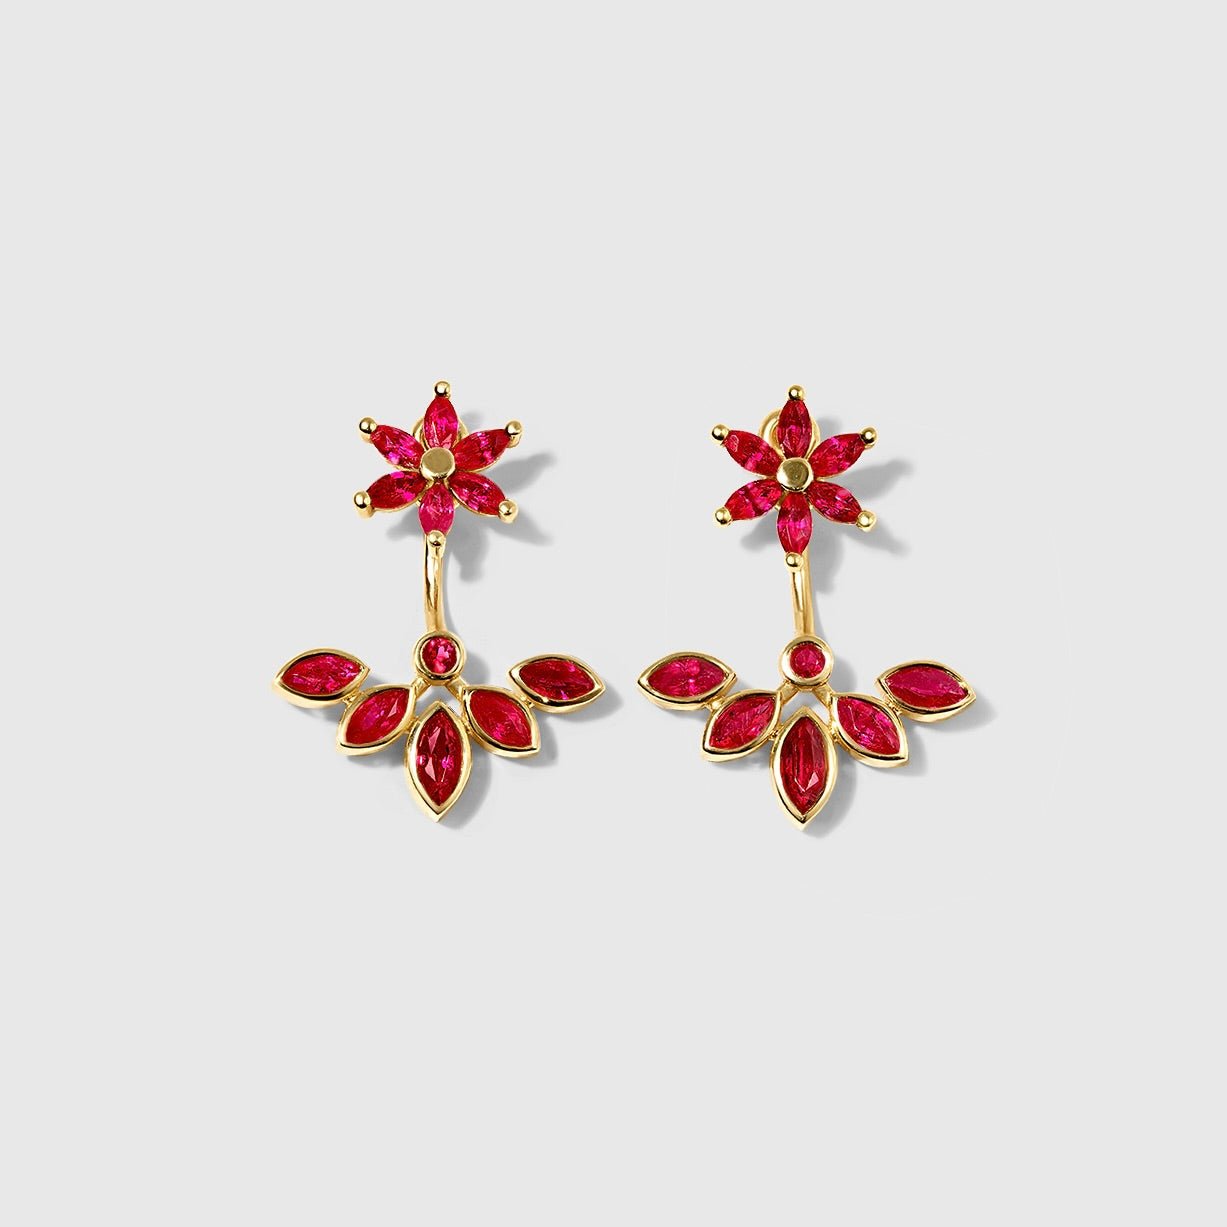 Amalia - Ruby Flower Ear Jacket Earrings – La Fleur Rouge Collection of Rubies & Solid Gold  - Aurora Laffite Jewelry